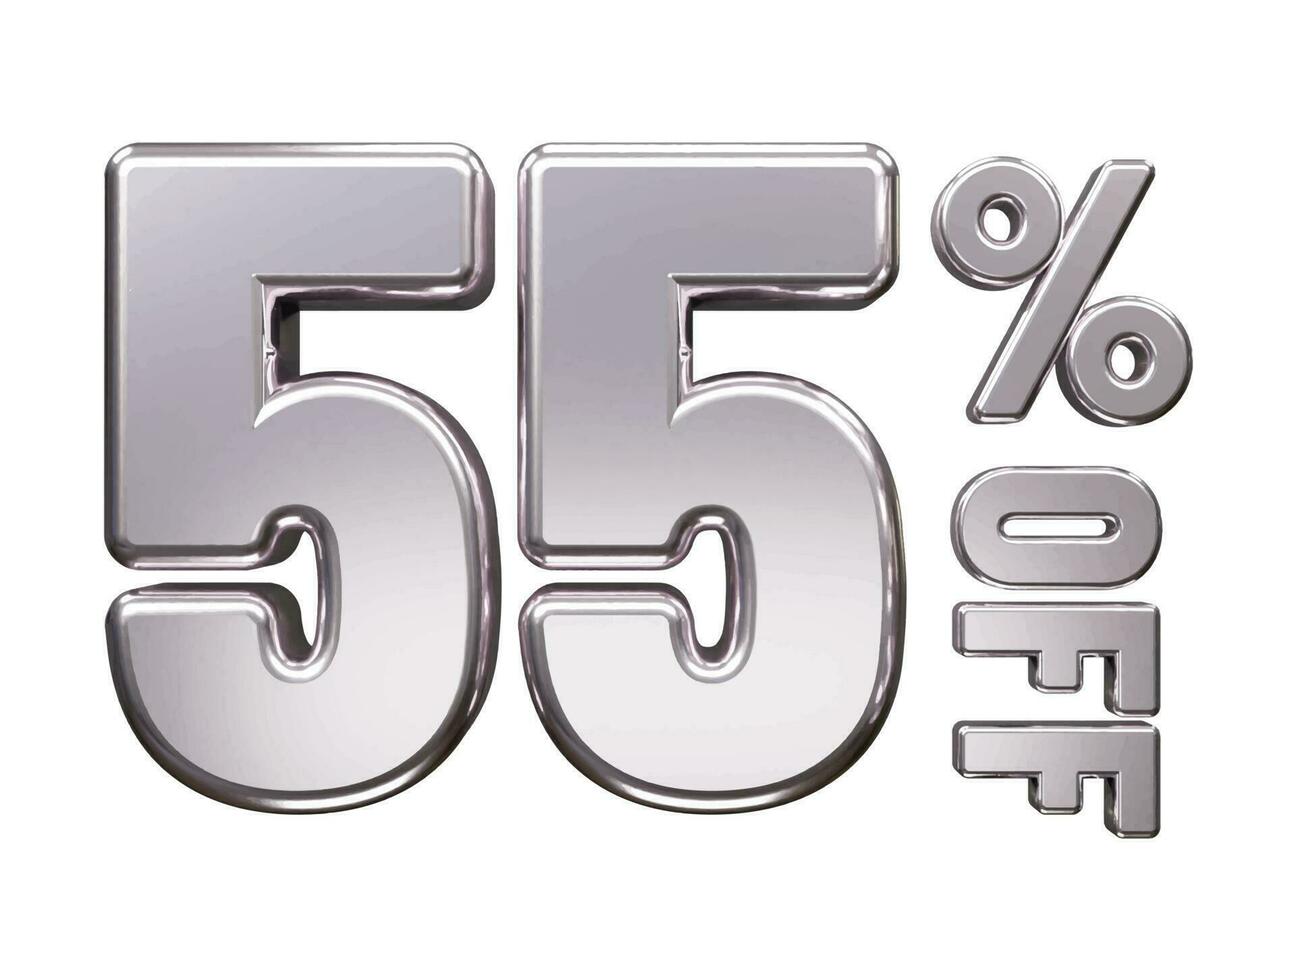 Percent off discount sale vector 3d rendering